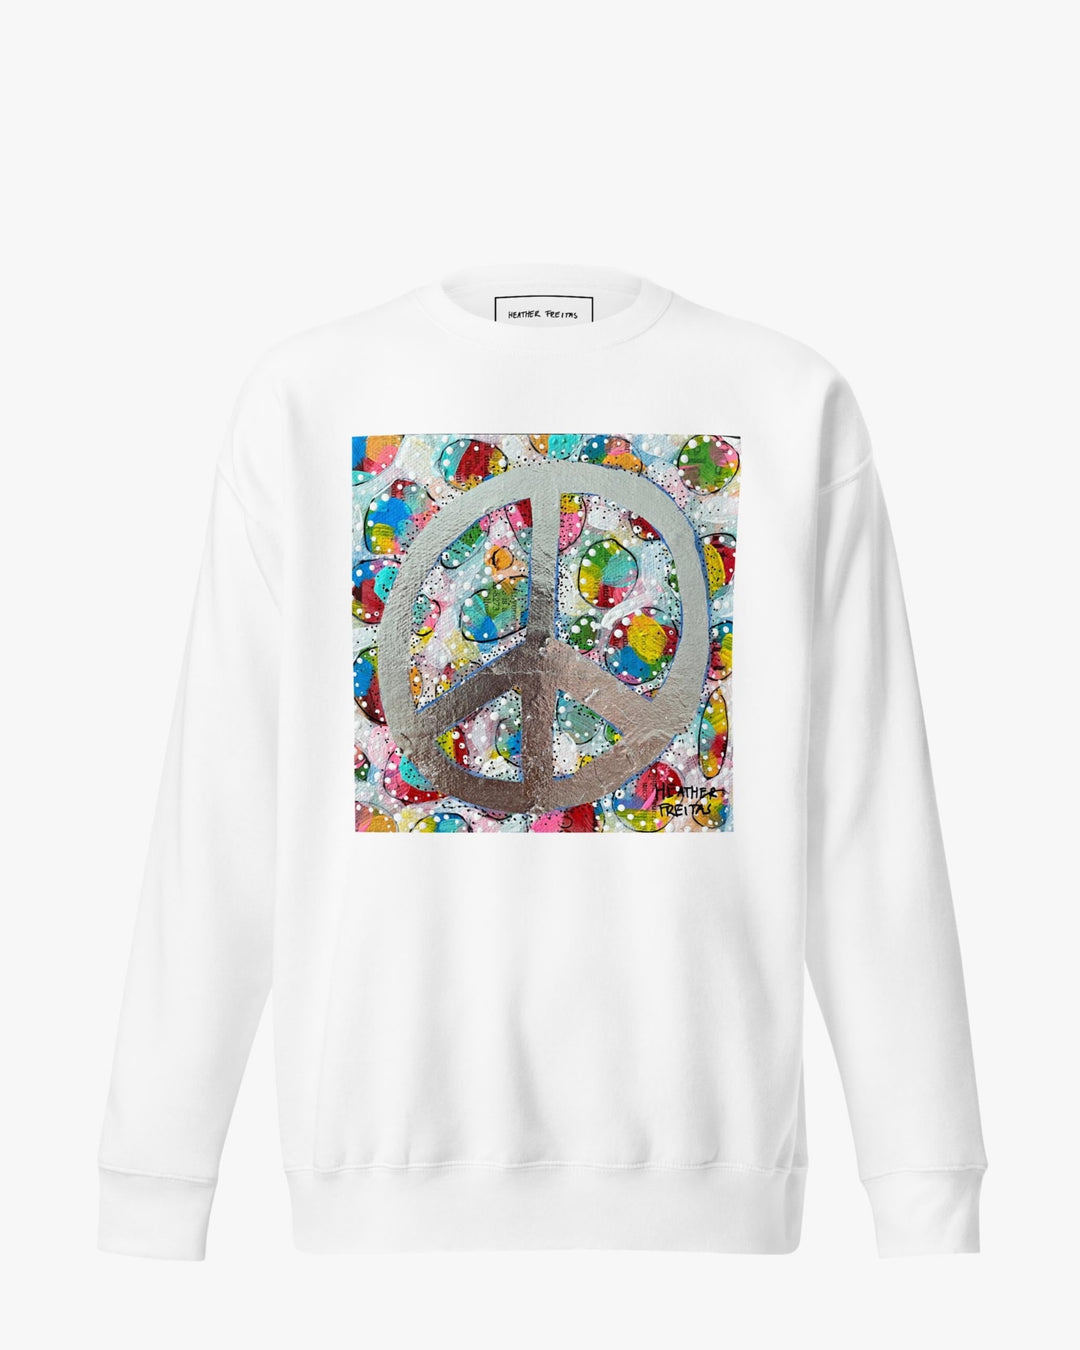 Silver Glam Peace Sign Unisex Premium Sweatshirt - Heather Freitas - fine art home deccor